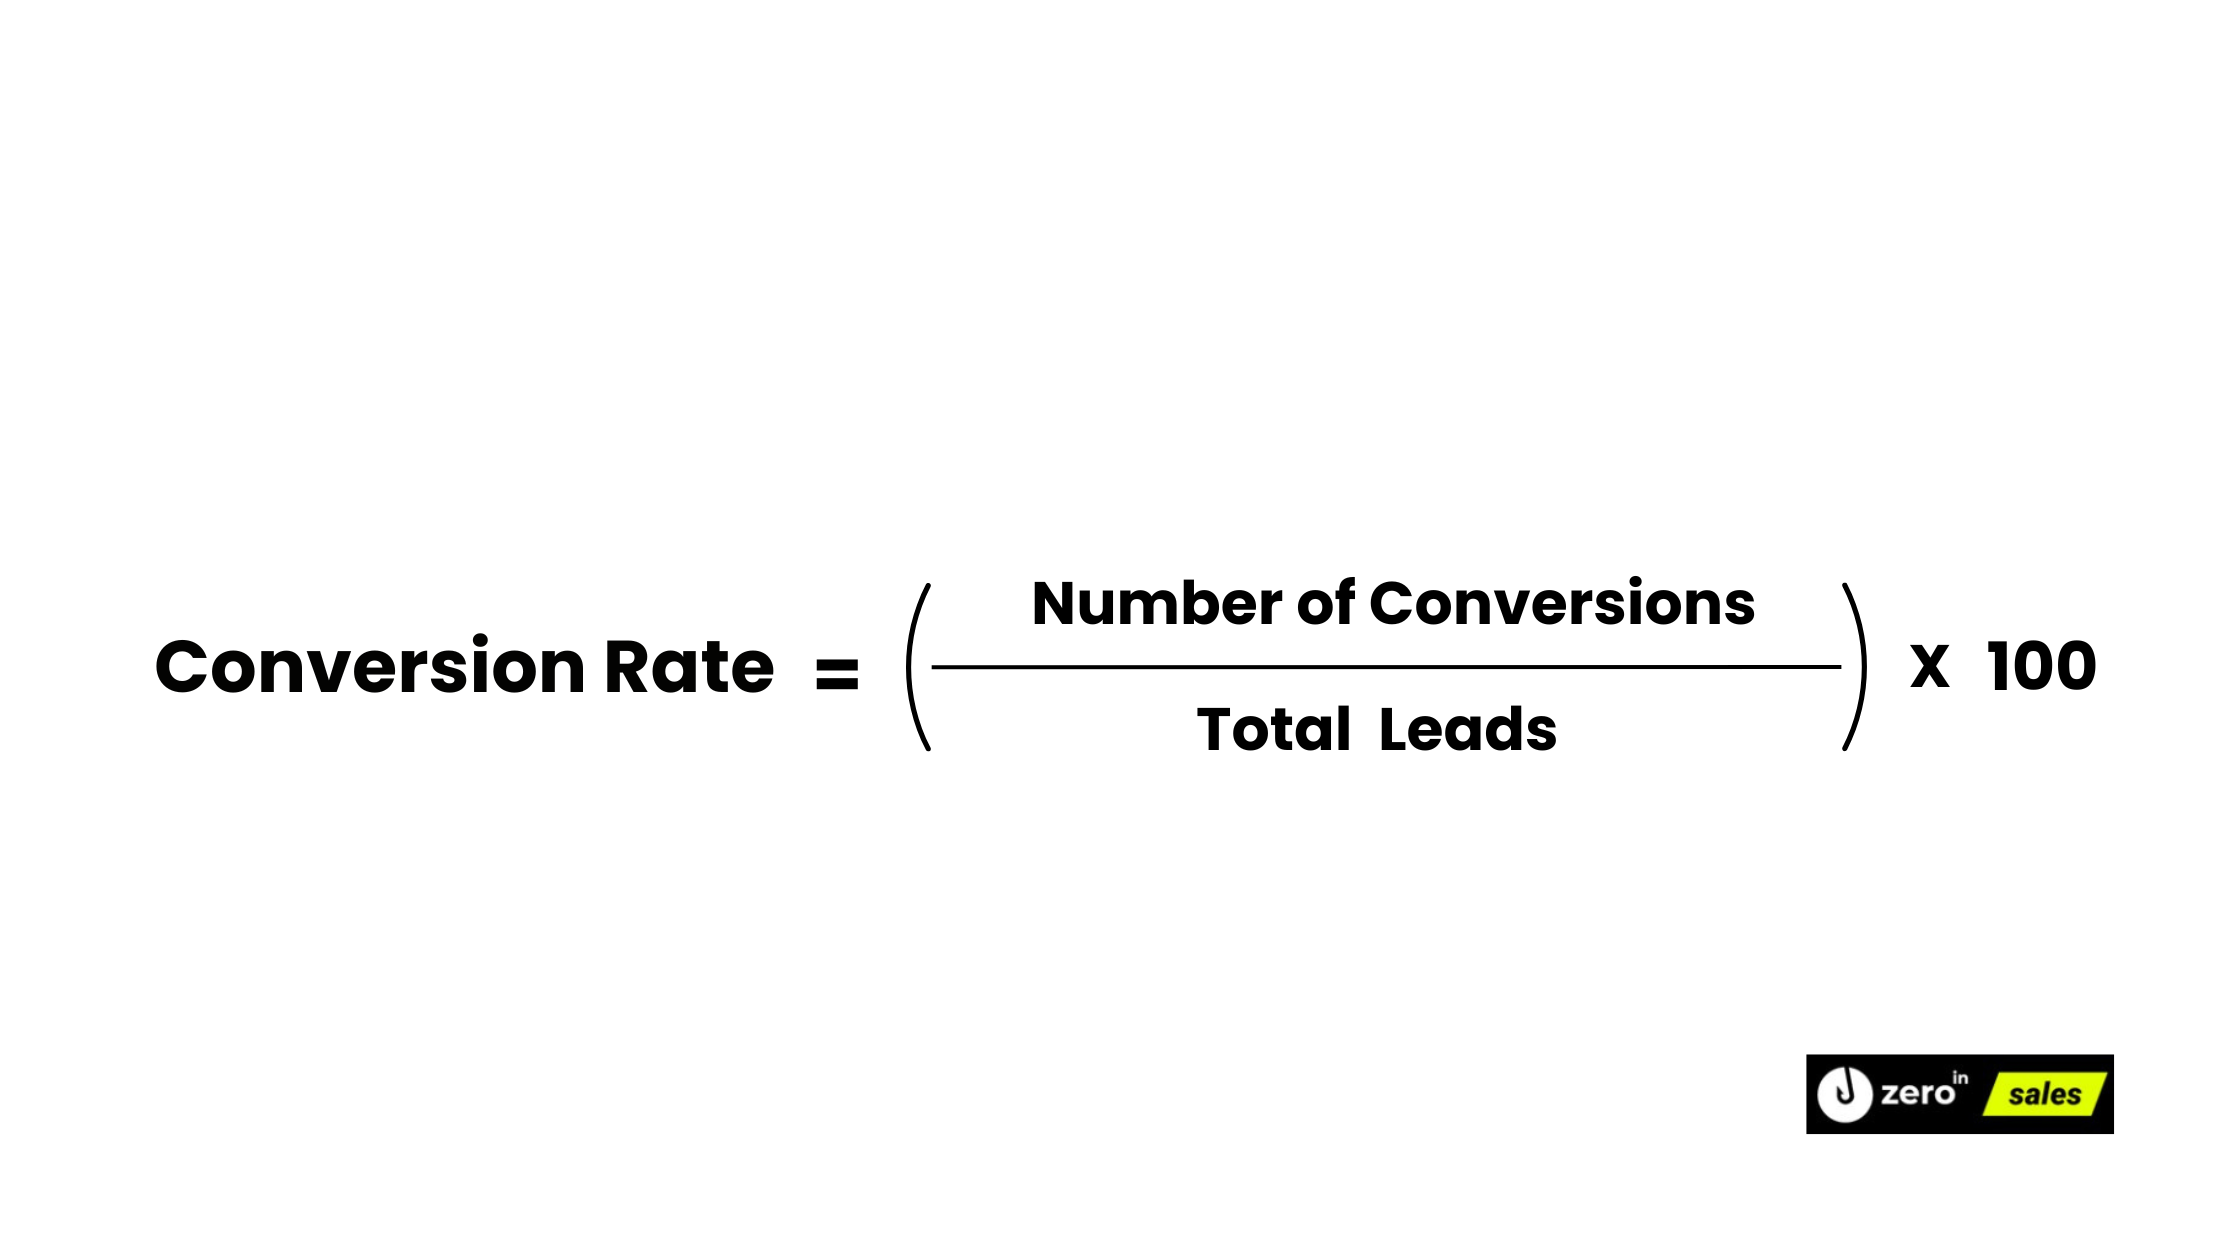 Conversion Rate Formula